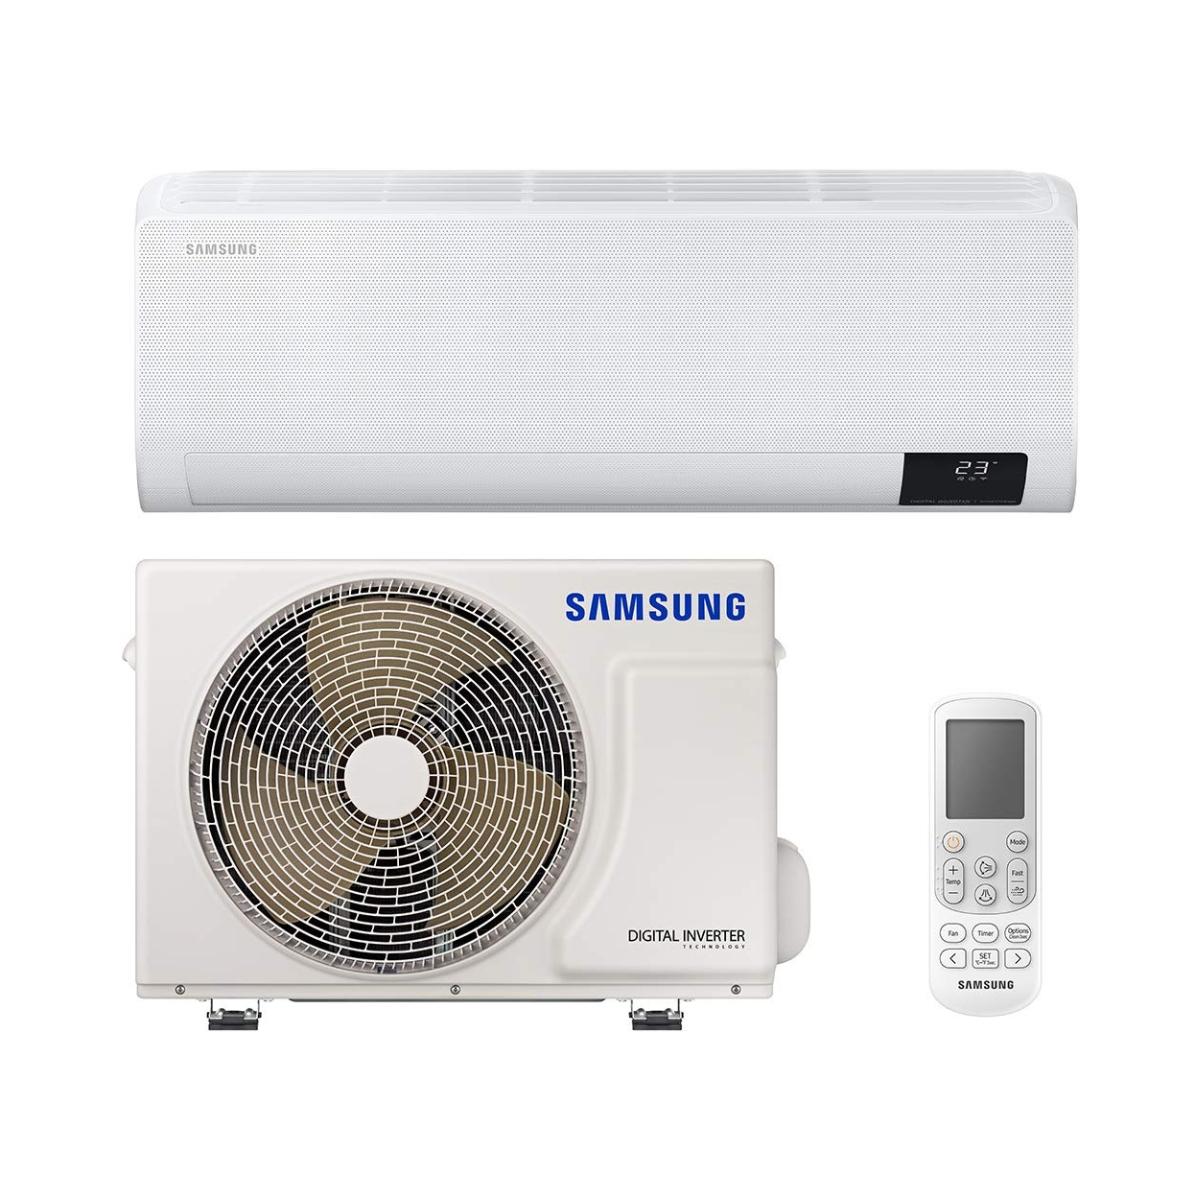 Ar condicionado fixo 1x1 Samsung Wind Free Comfort F-AR09NXT 2,5kW 9000 BTU com referência F-AR09NXT à marca SAMSUNG